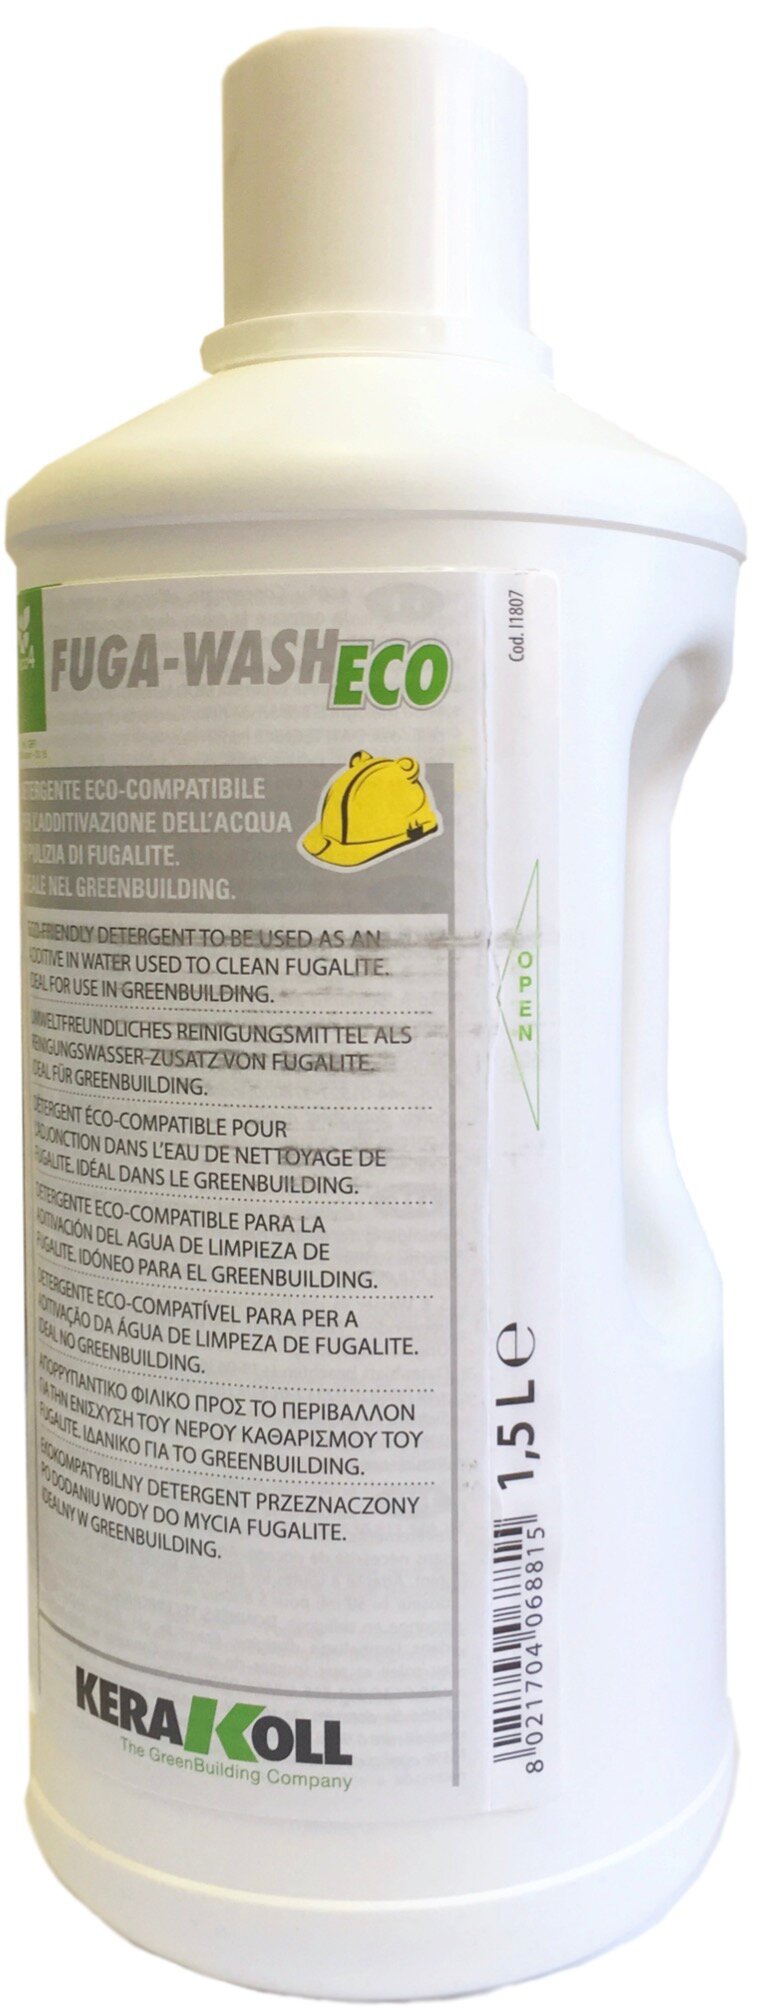 Kerakoll FUGA-WASH ECO смывка для эпоксидной затирки Fugalite Eco 1.5л.